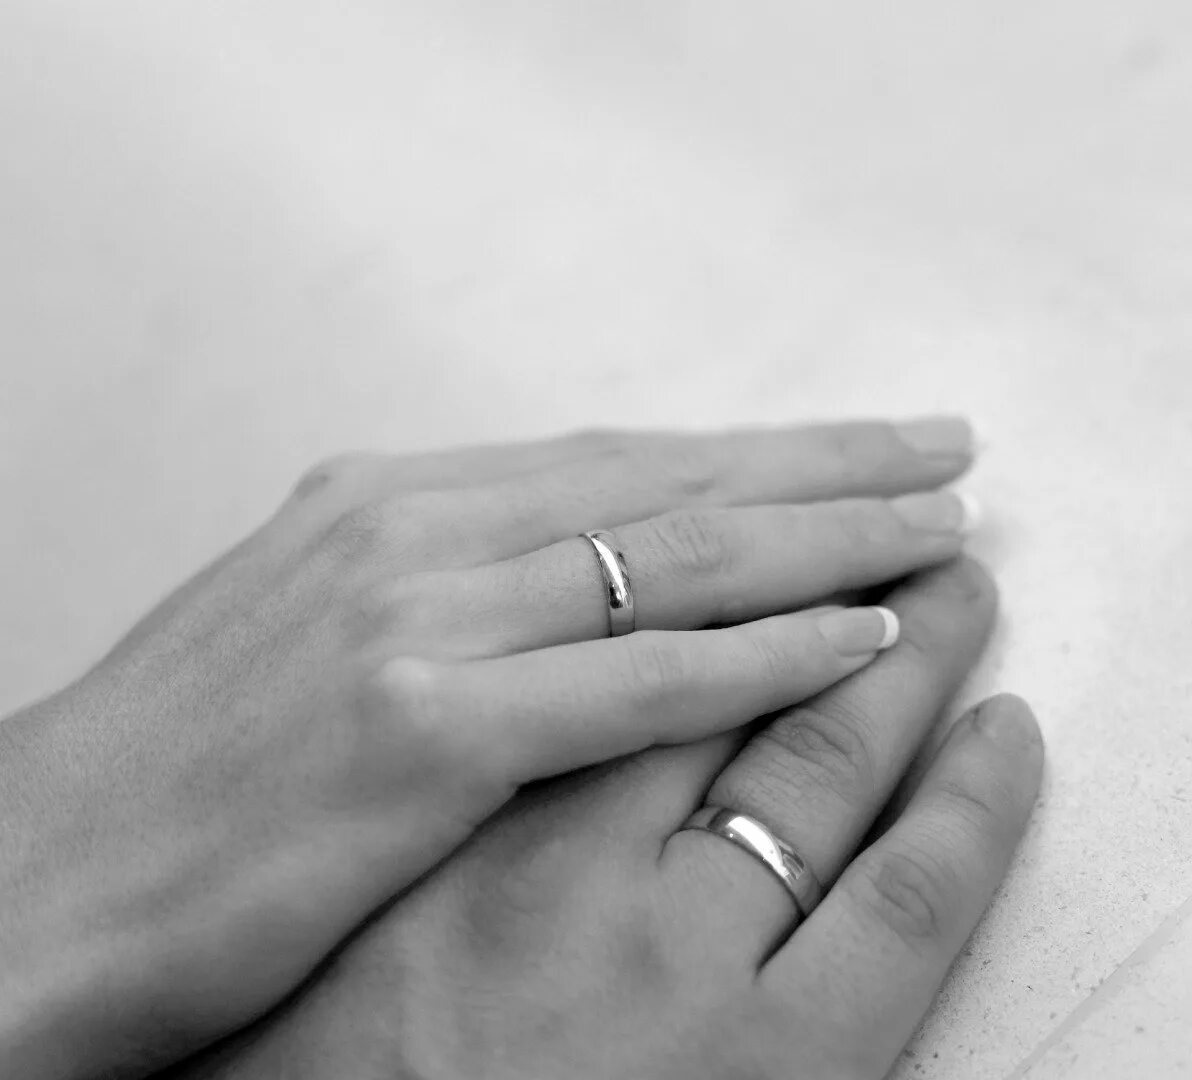 Обручальные кольца на руках. Кольцо на руке. Две руки с обручальными кольцами. Мужские обручальные кольца на руке. Видеть обручальное кольцо на пальце во сне